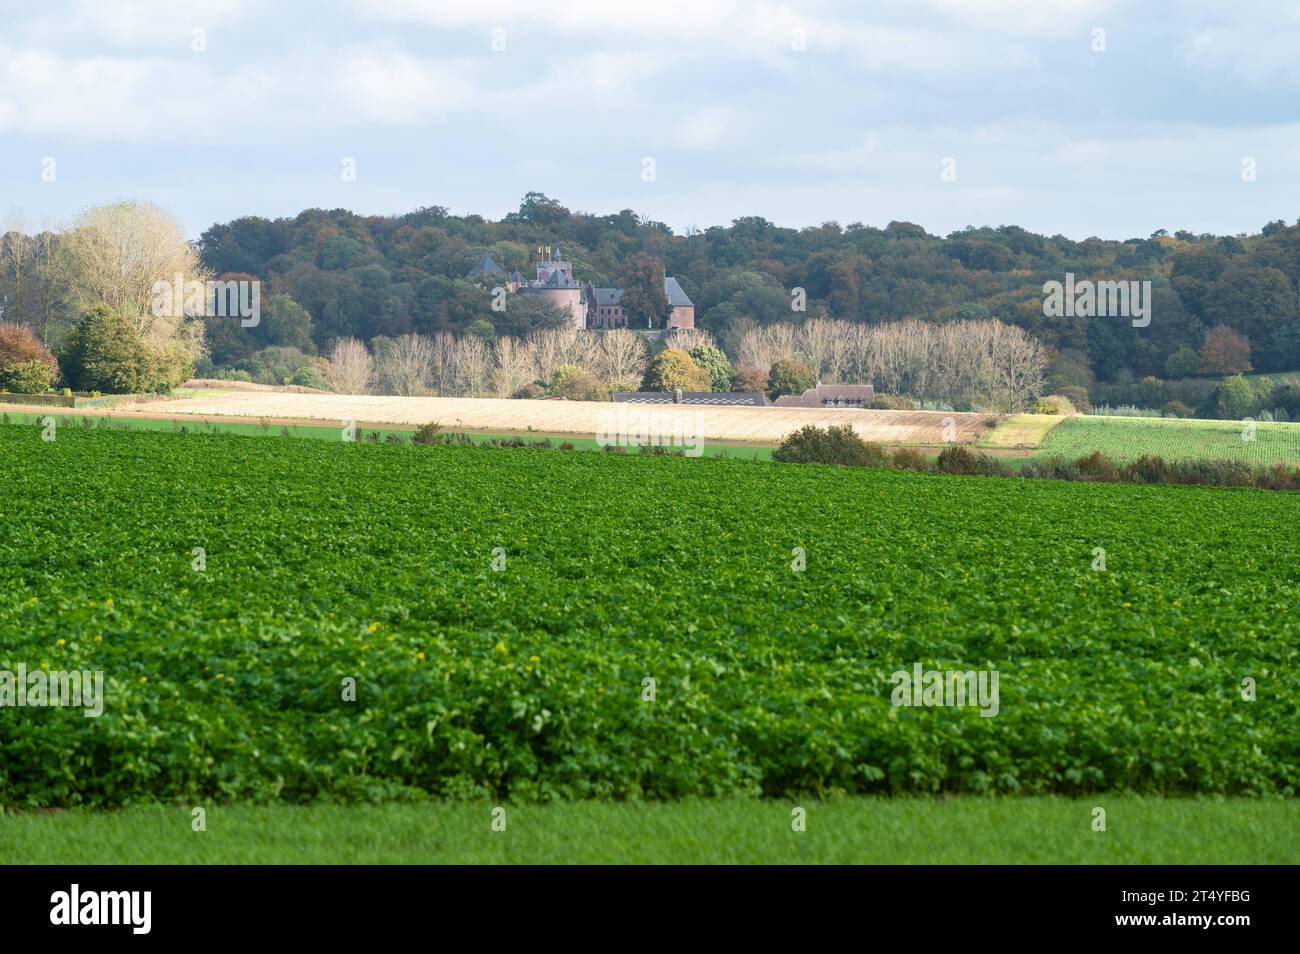 Green potato fields and wheat fields at the Flemish countryside around Lennik, Flemish Brabant, Belgium Credit: Imago/Alamy Live News Stock Photo